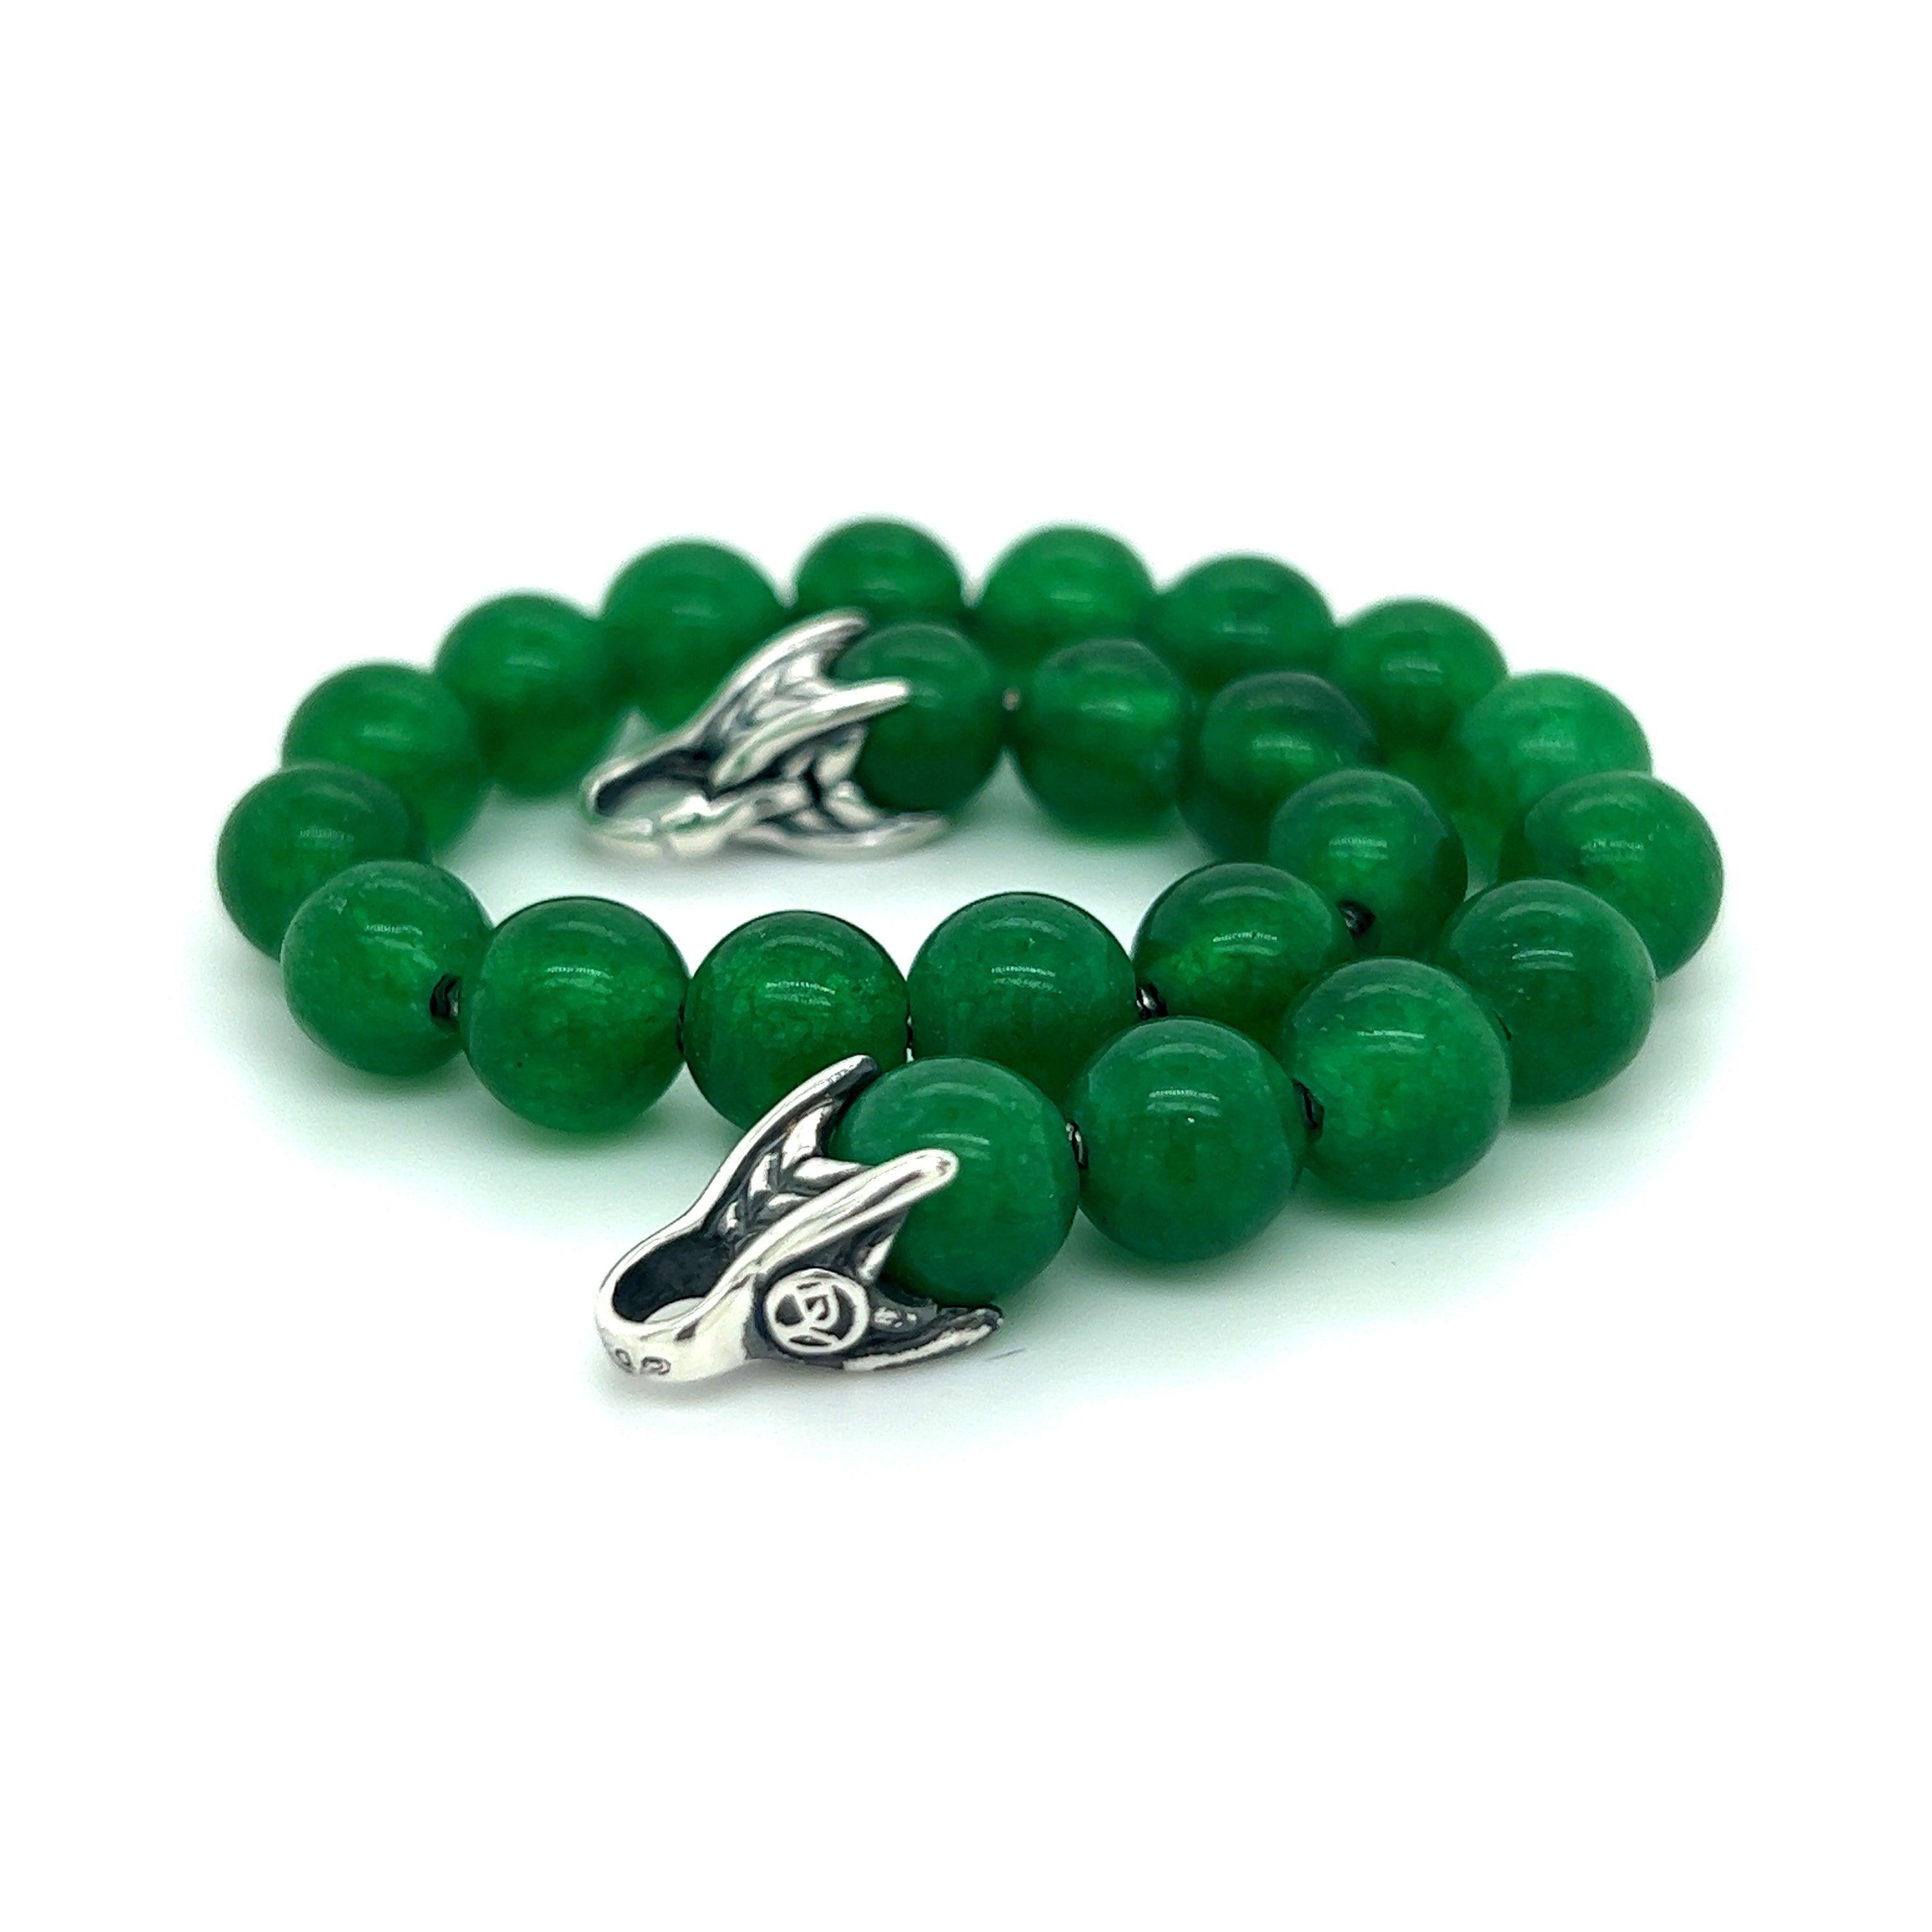 Authentic David Yurman Estate Green Onyx Spiritual Bead Bracelet 8.5